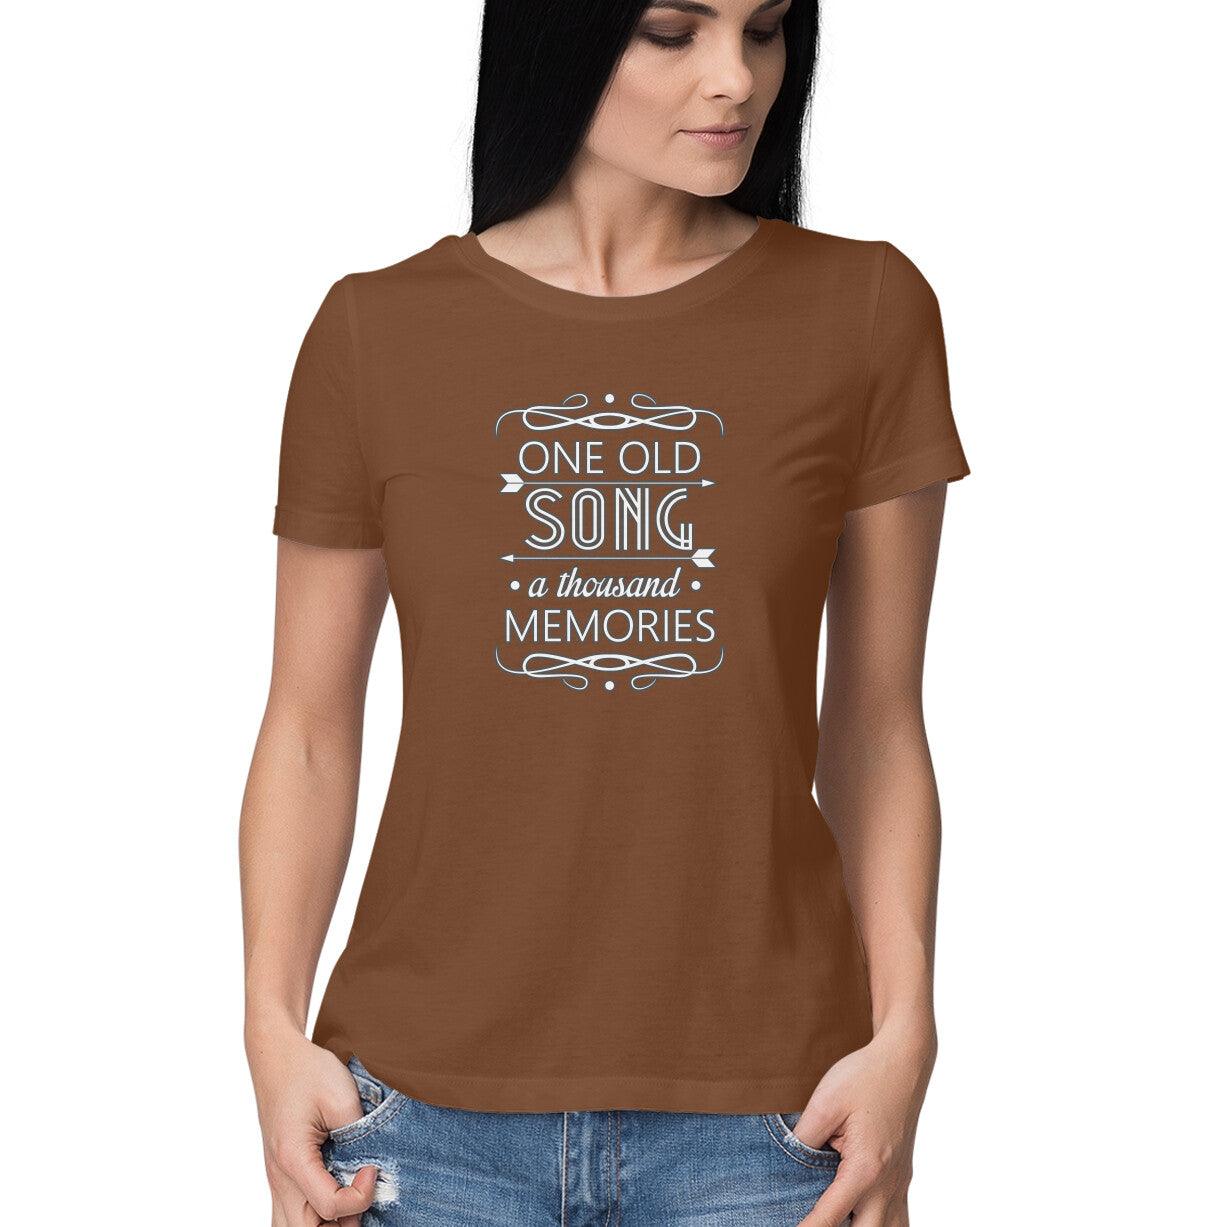 Coffee Brown T-shirt for women qho love music